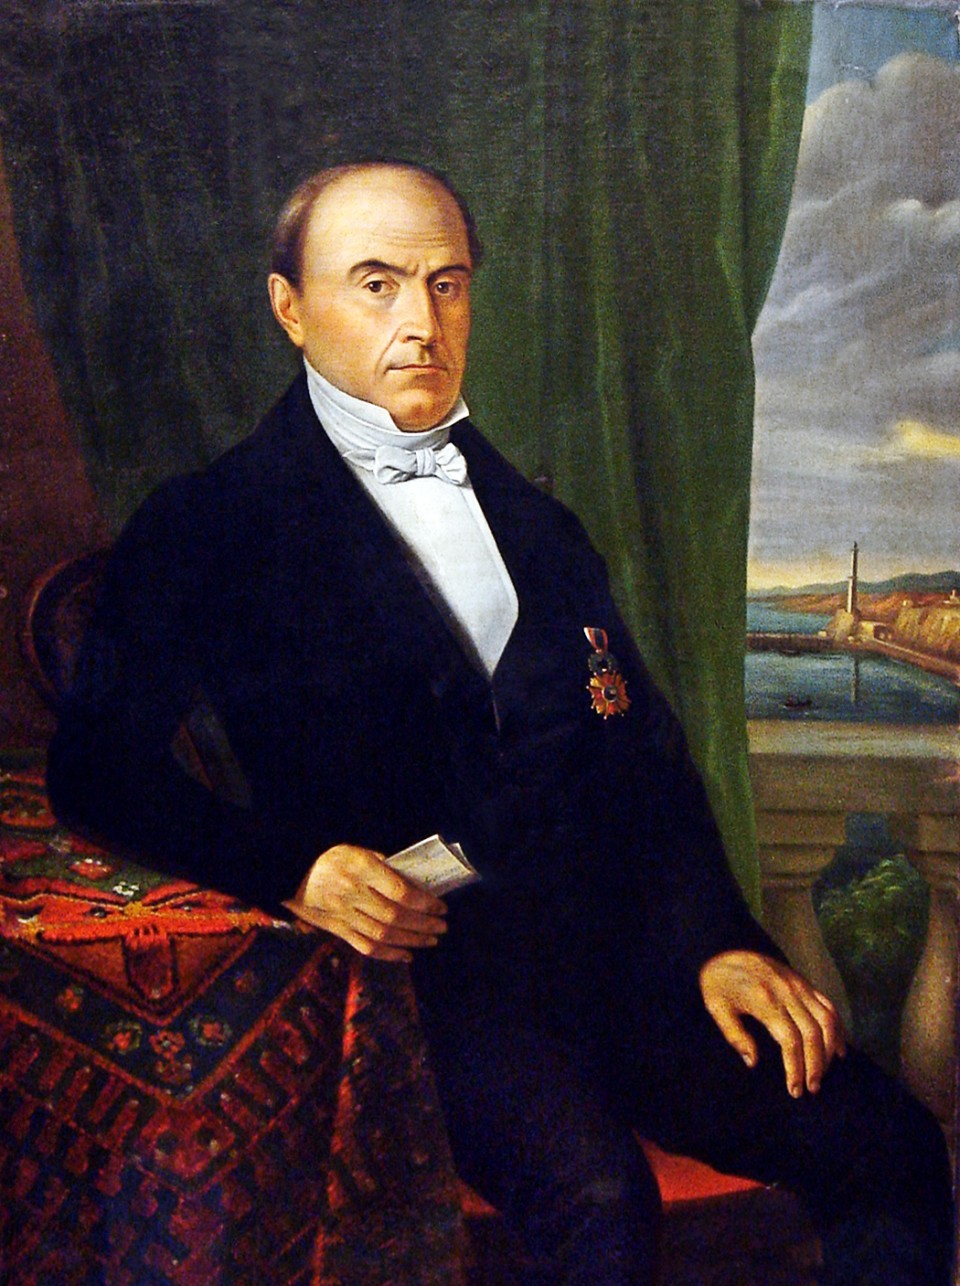 Miquel Biada l'any 1840